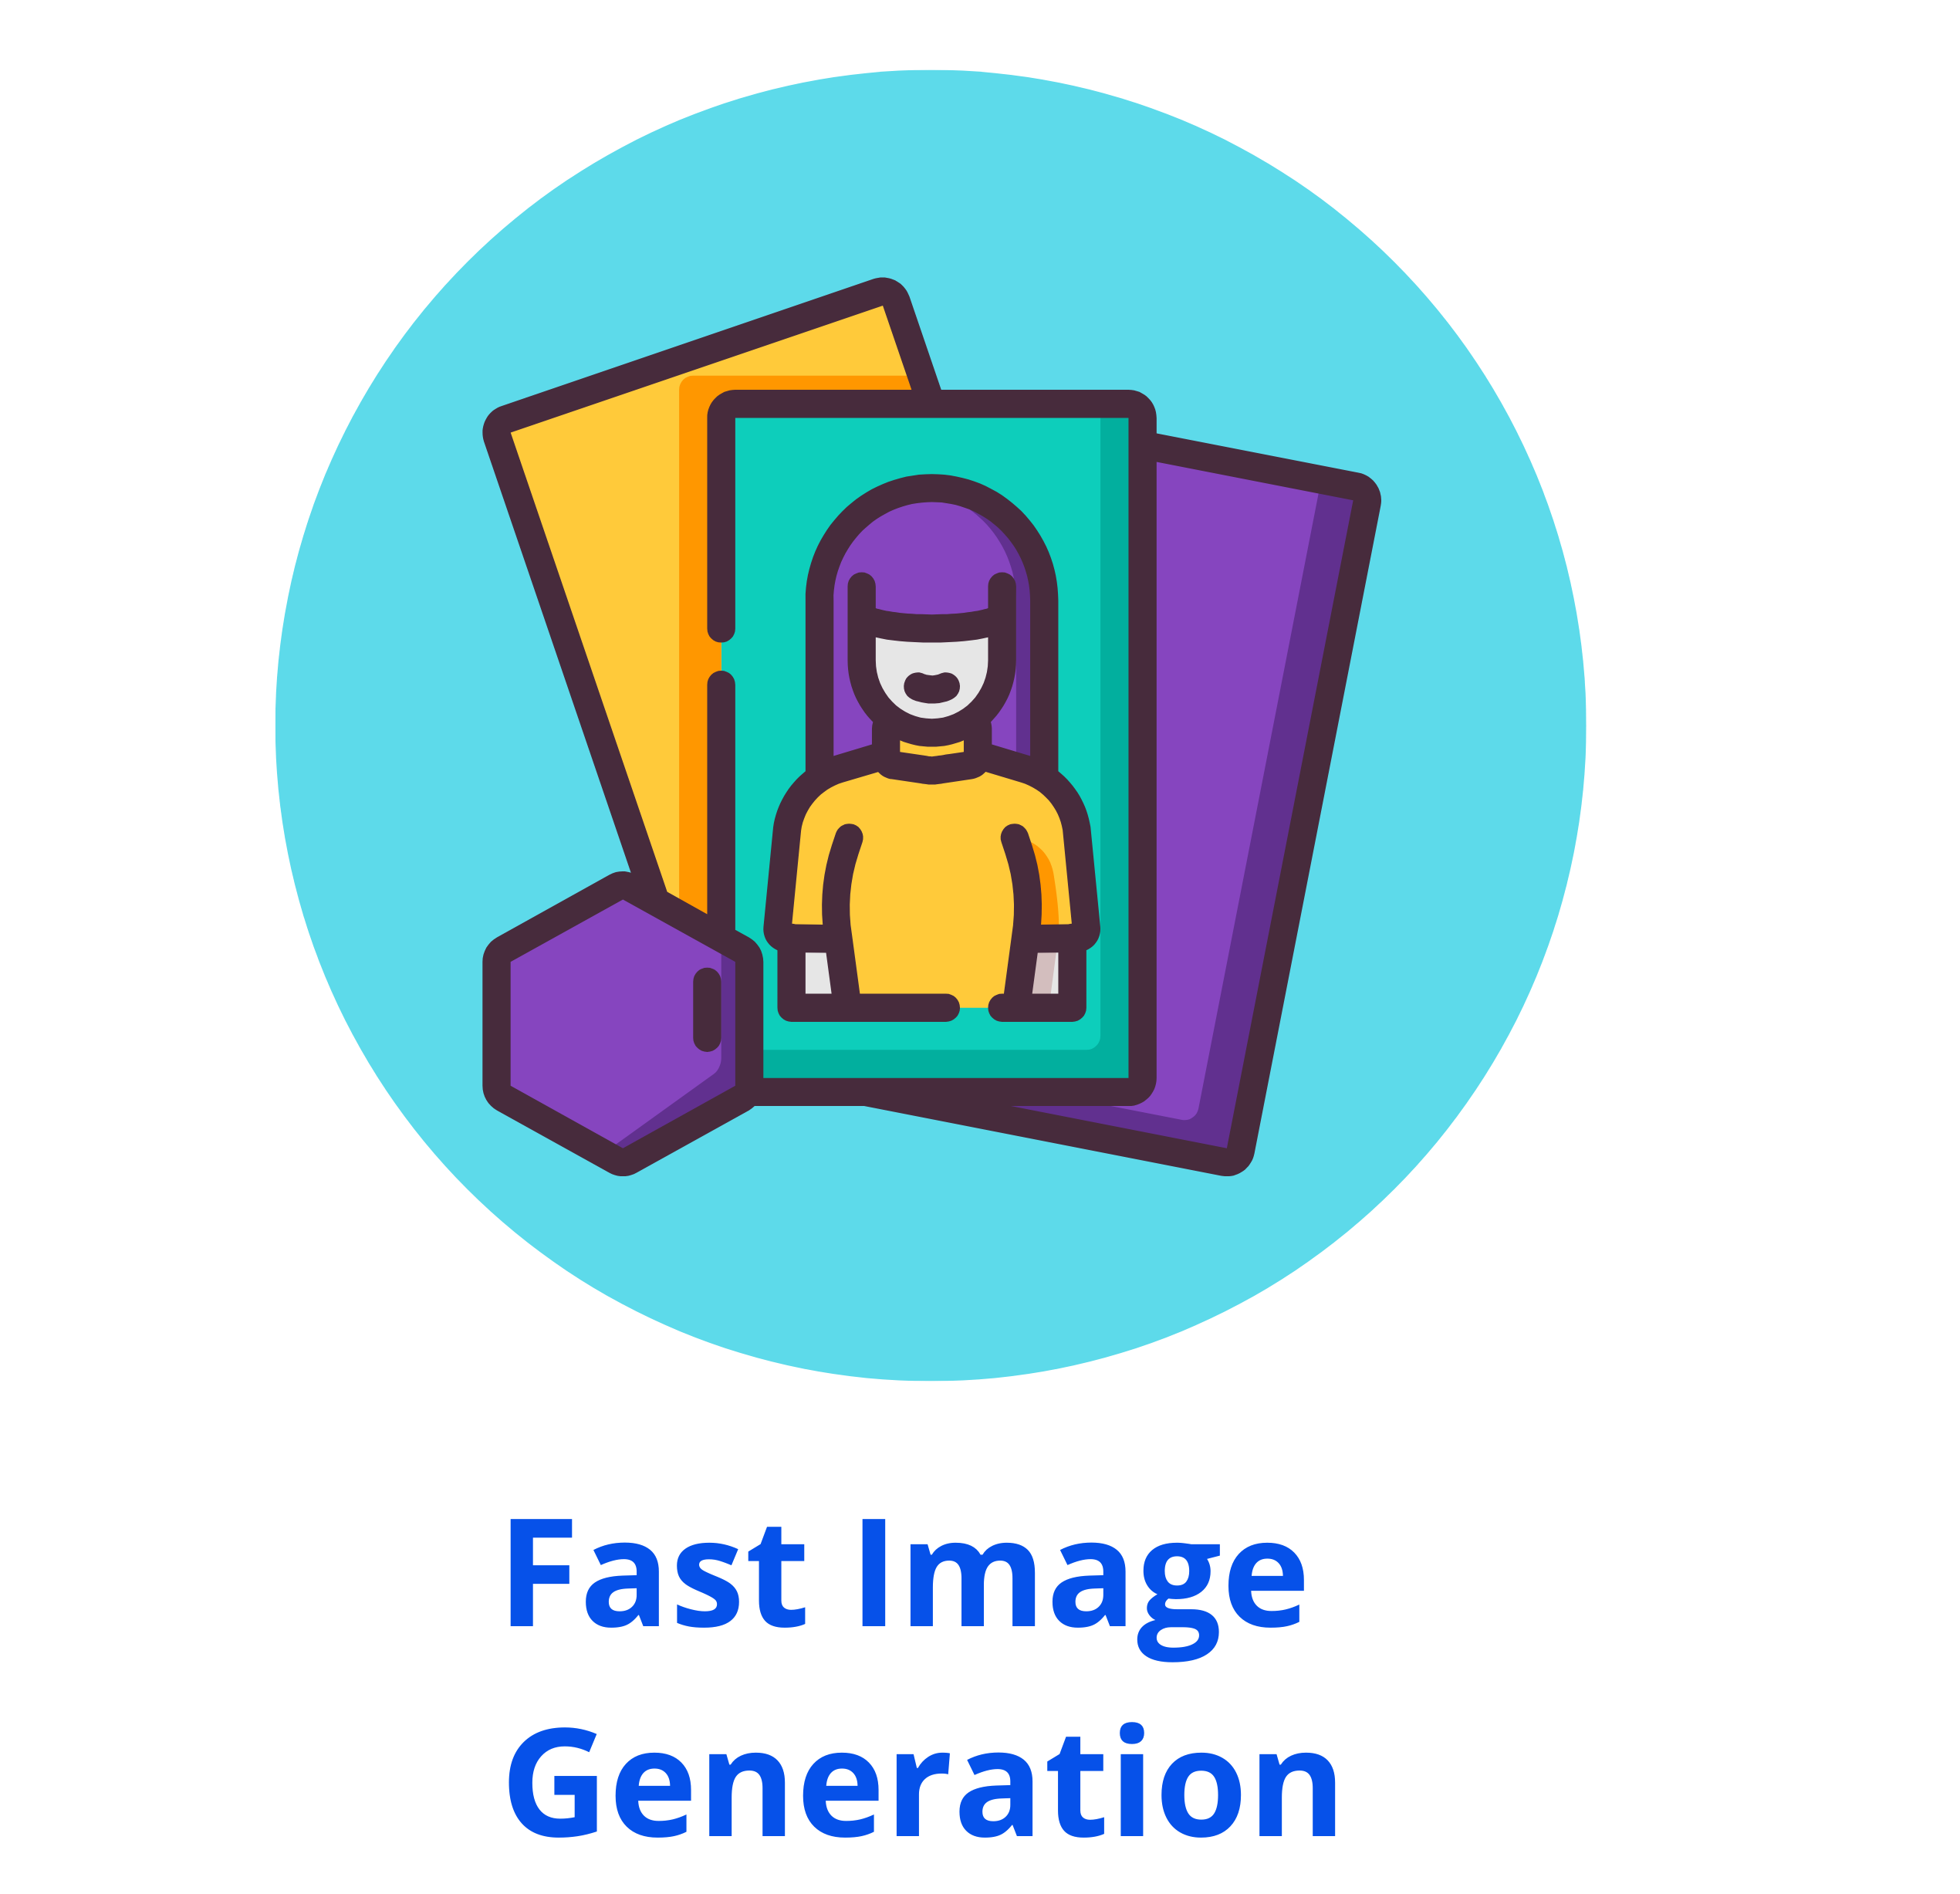 Fast Image Generation